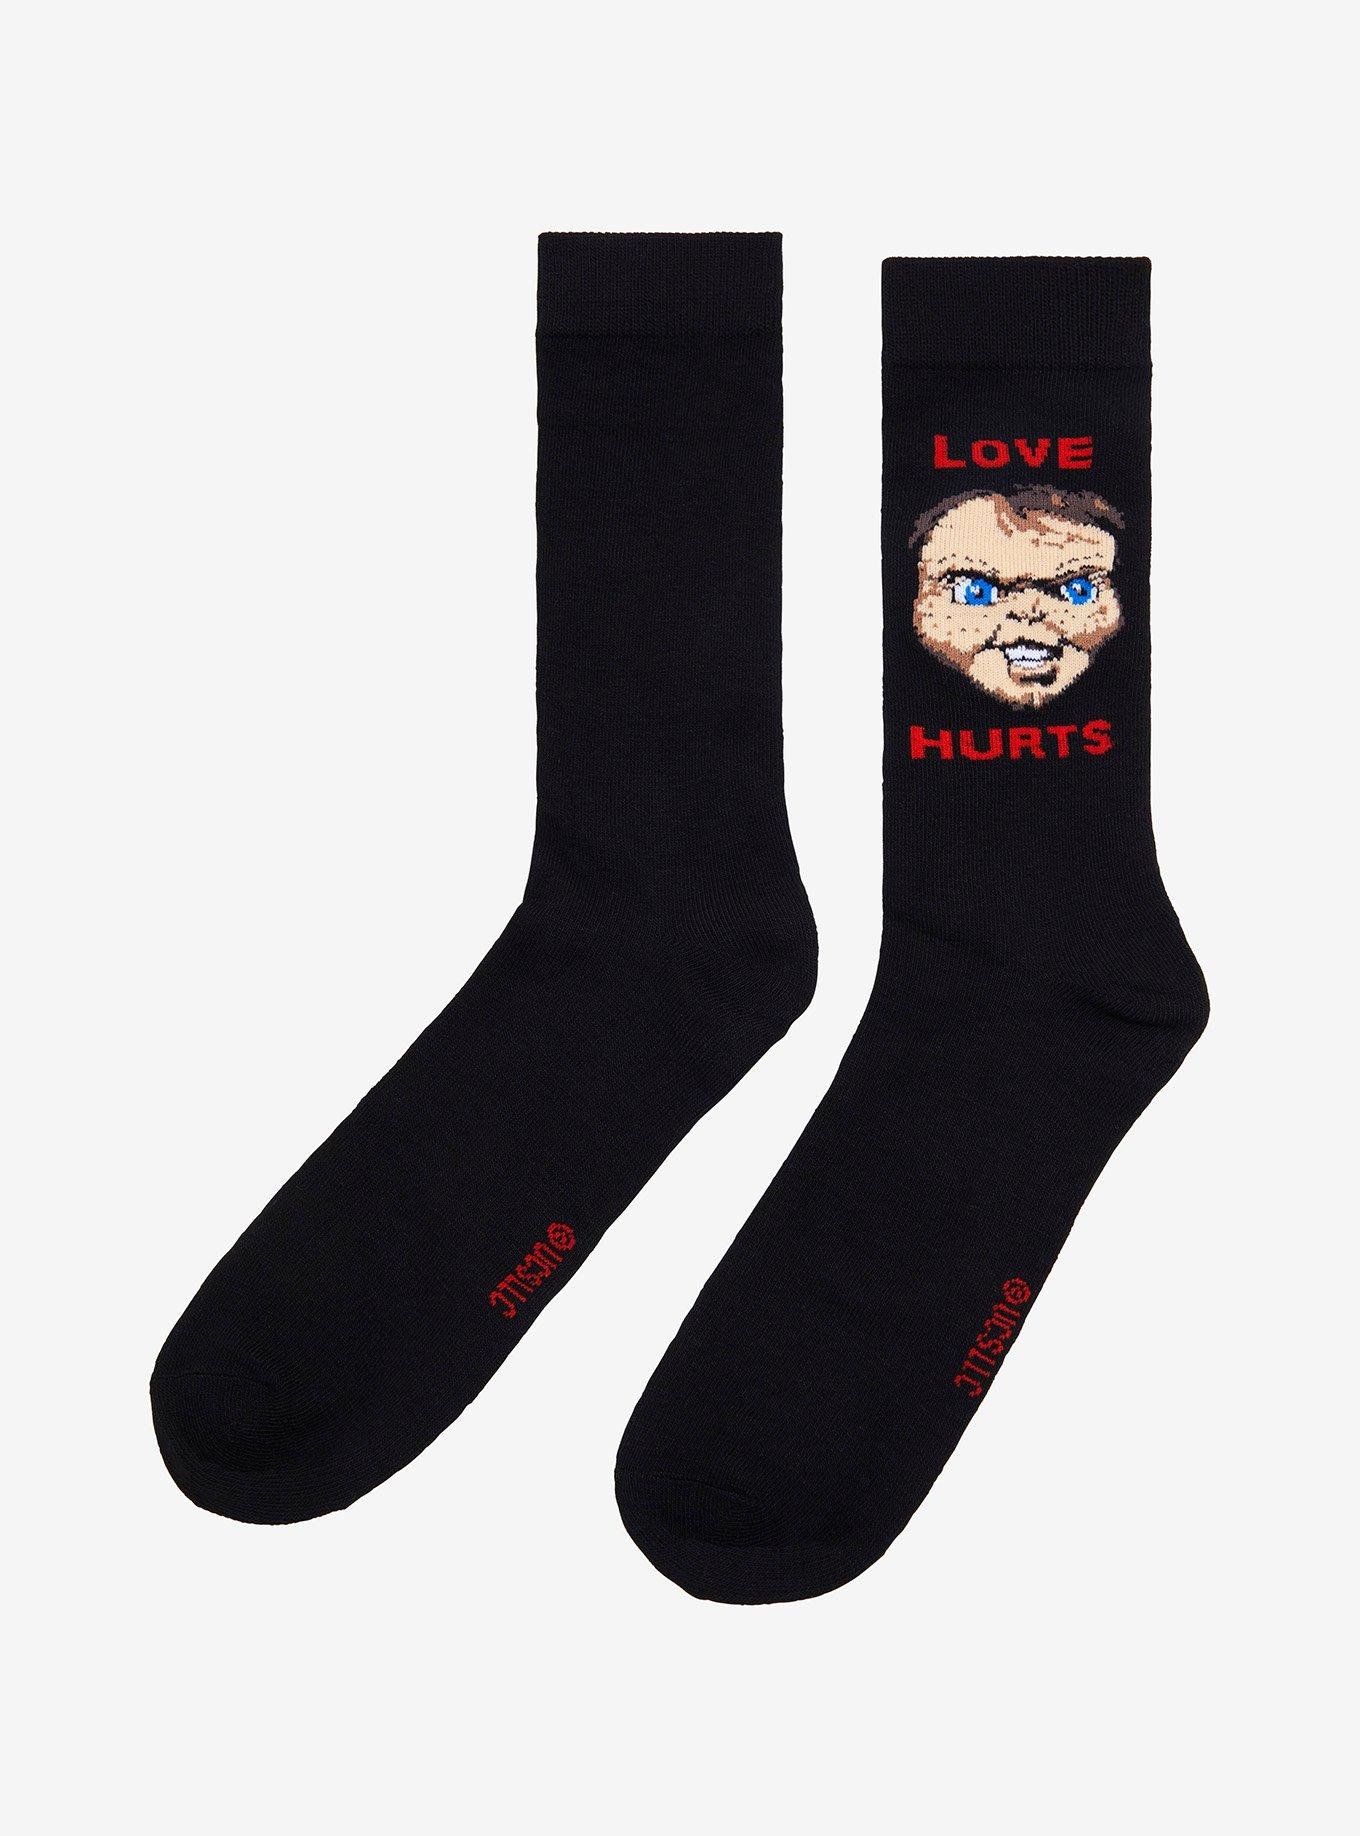 Chucky Love Hurts Crew Socks